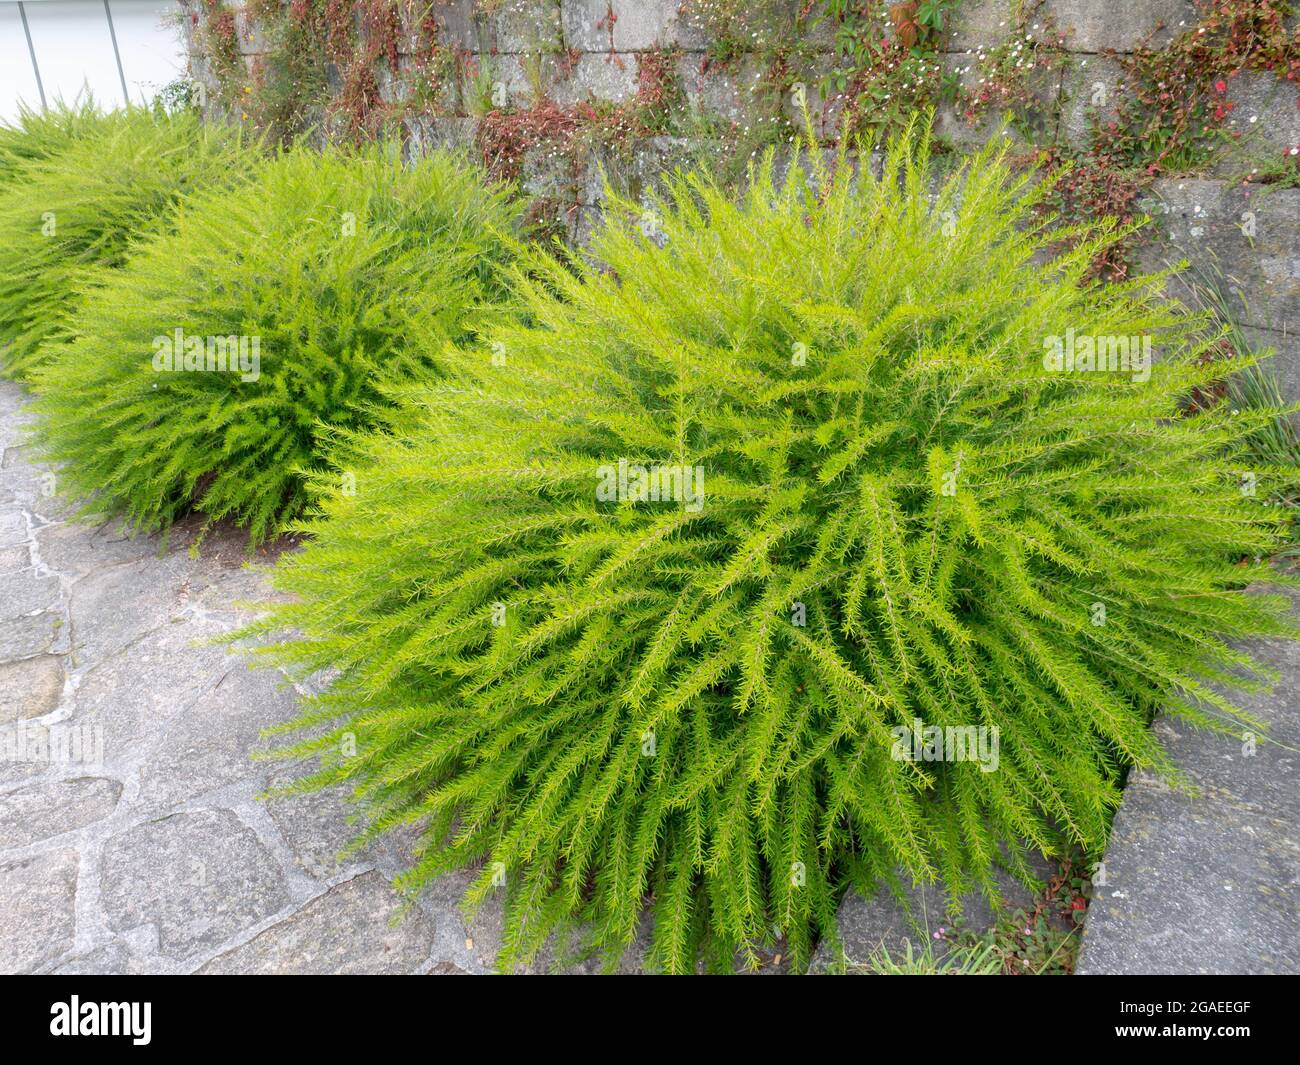 Juniper-leaf grevillea or prickly spider-flower plants. Bright green fluffy decorative shrubs. Stock Photo